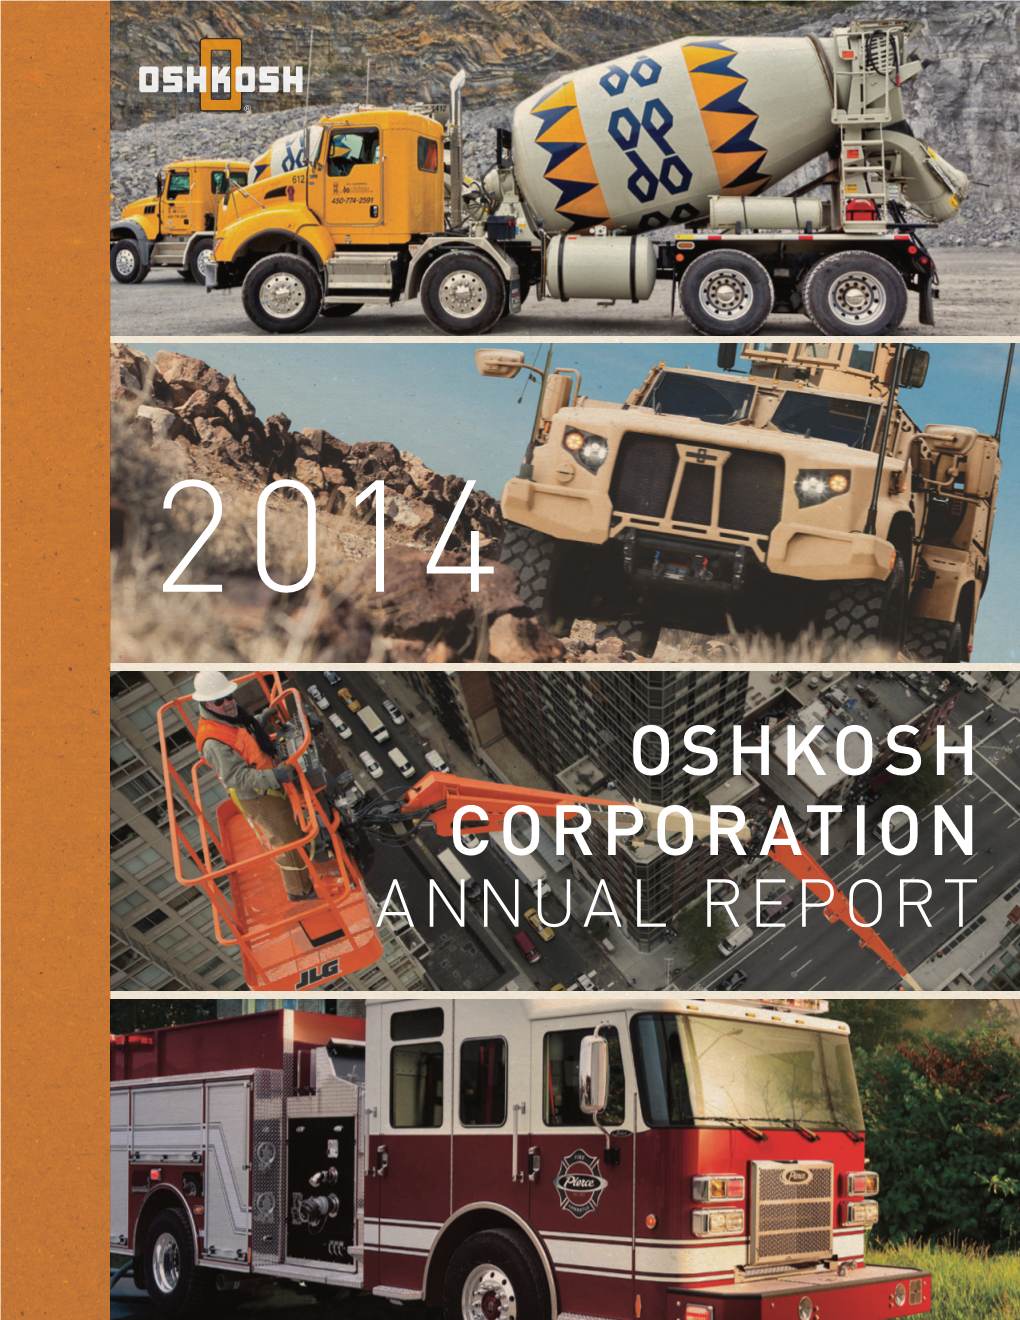 Oshkosh Corporation Annual Report Oshkosh Corporation 2014 Annual Report